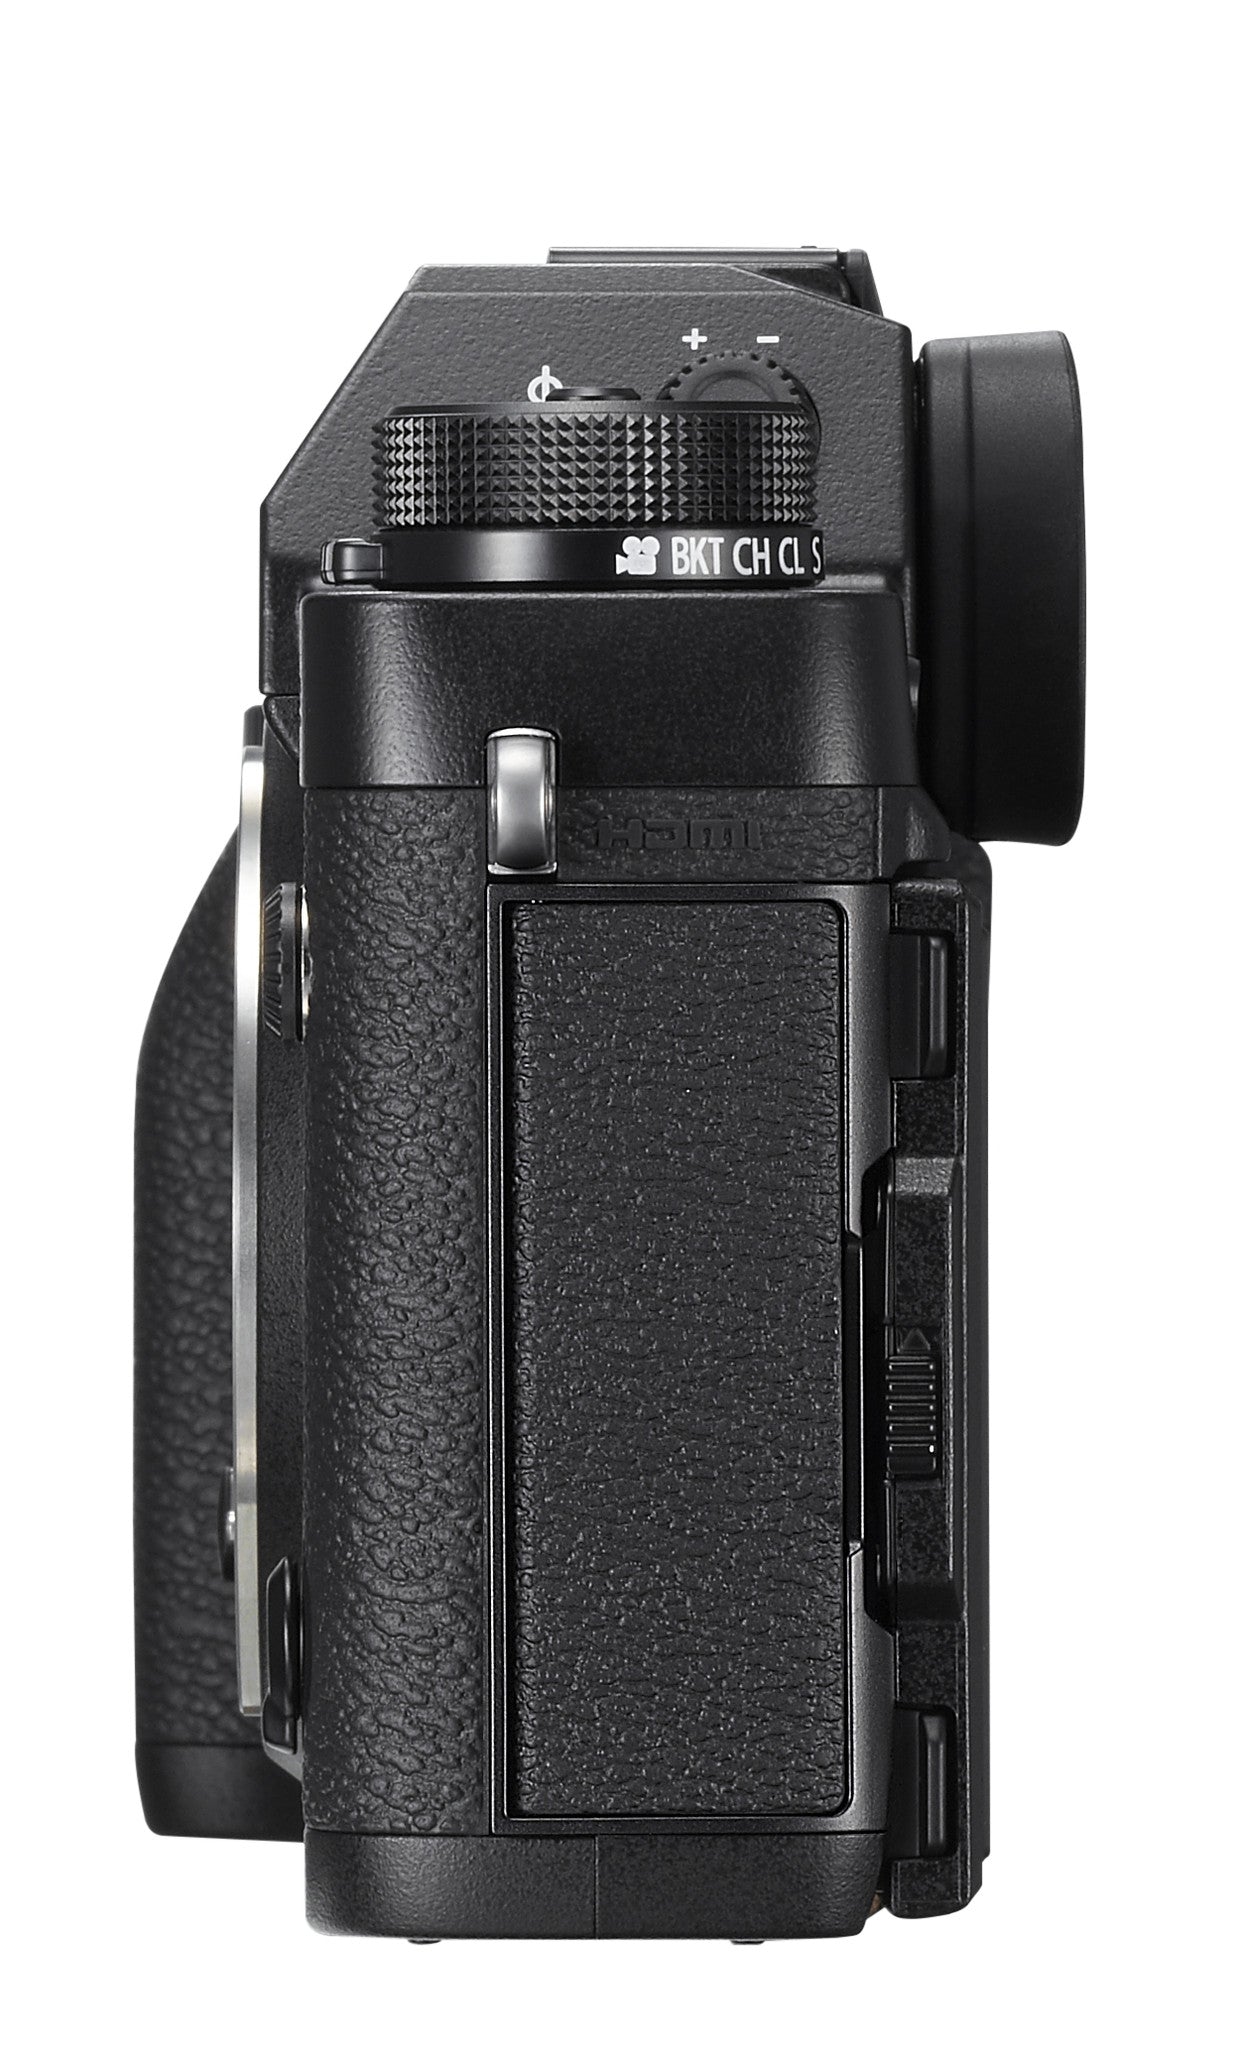 Fujifilm X-T2 Digital Camera Body (Black), camera mirrorless cameras, Fujifilm - Pictureline  - 2